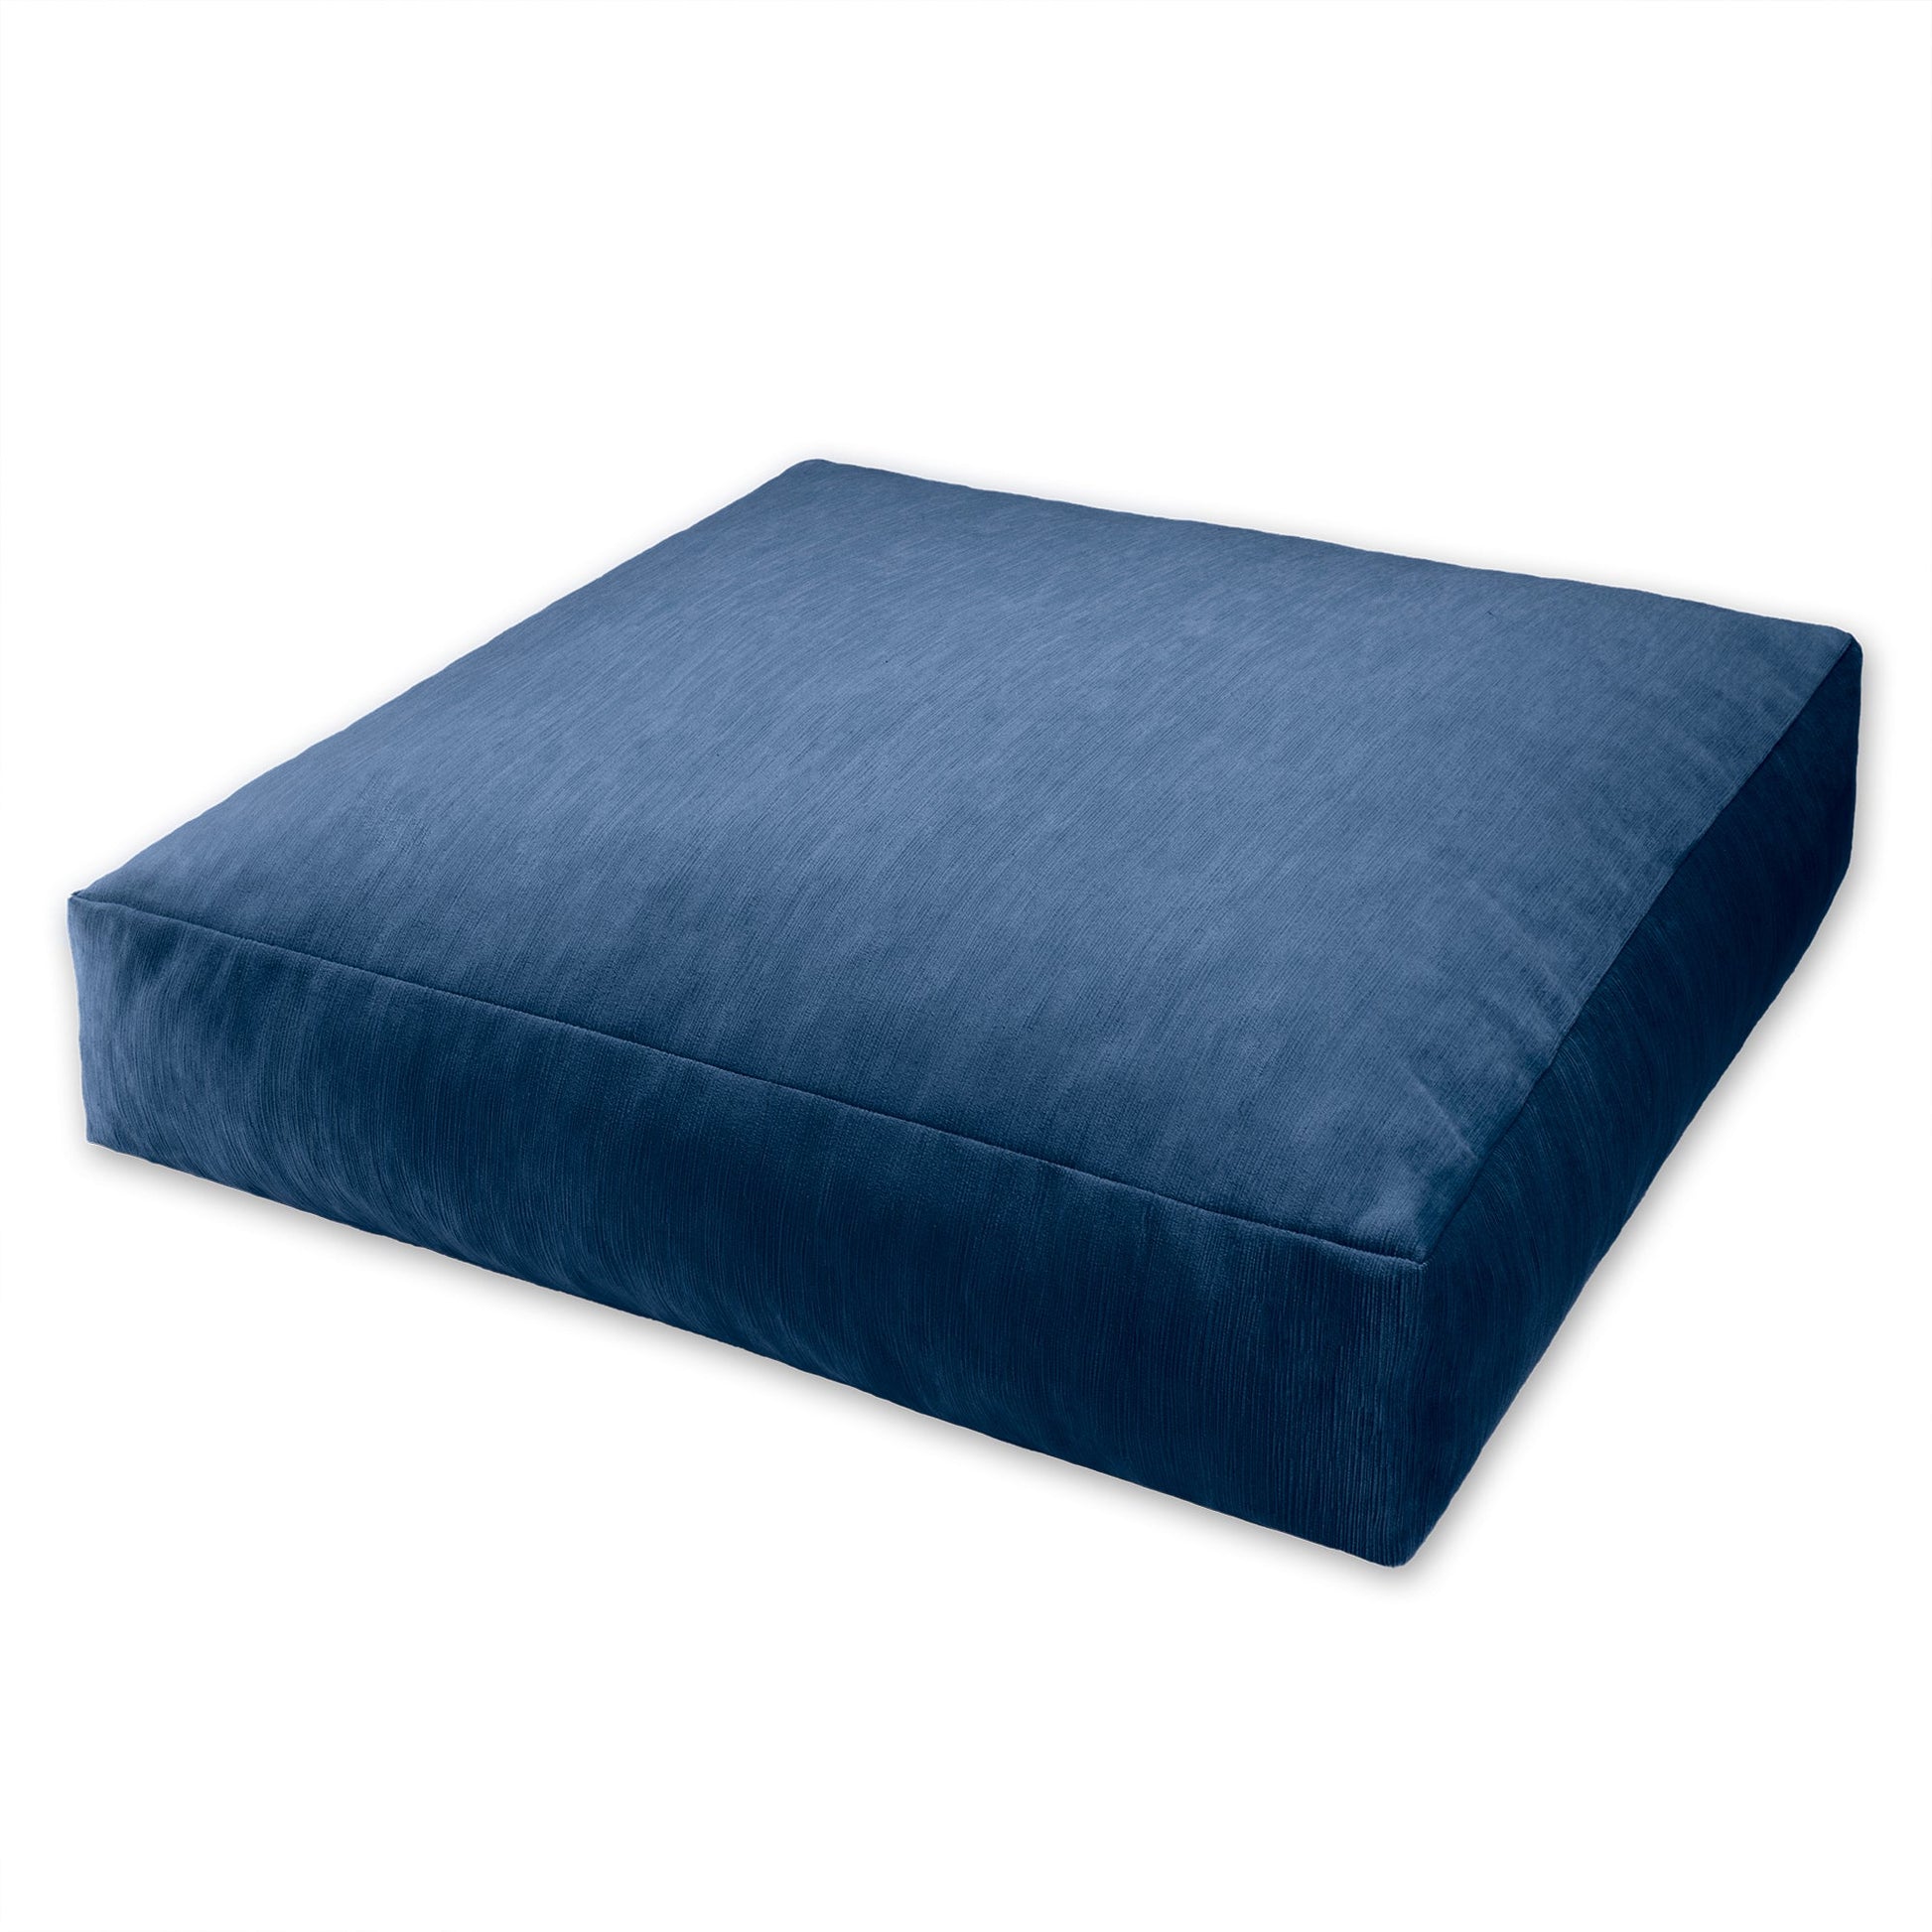 Jaxx Brio Large Décor Floor Pillow / Meditation Yoga Cushion, Plush Microvelvet (18680) - SchoolOutlet